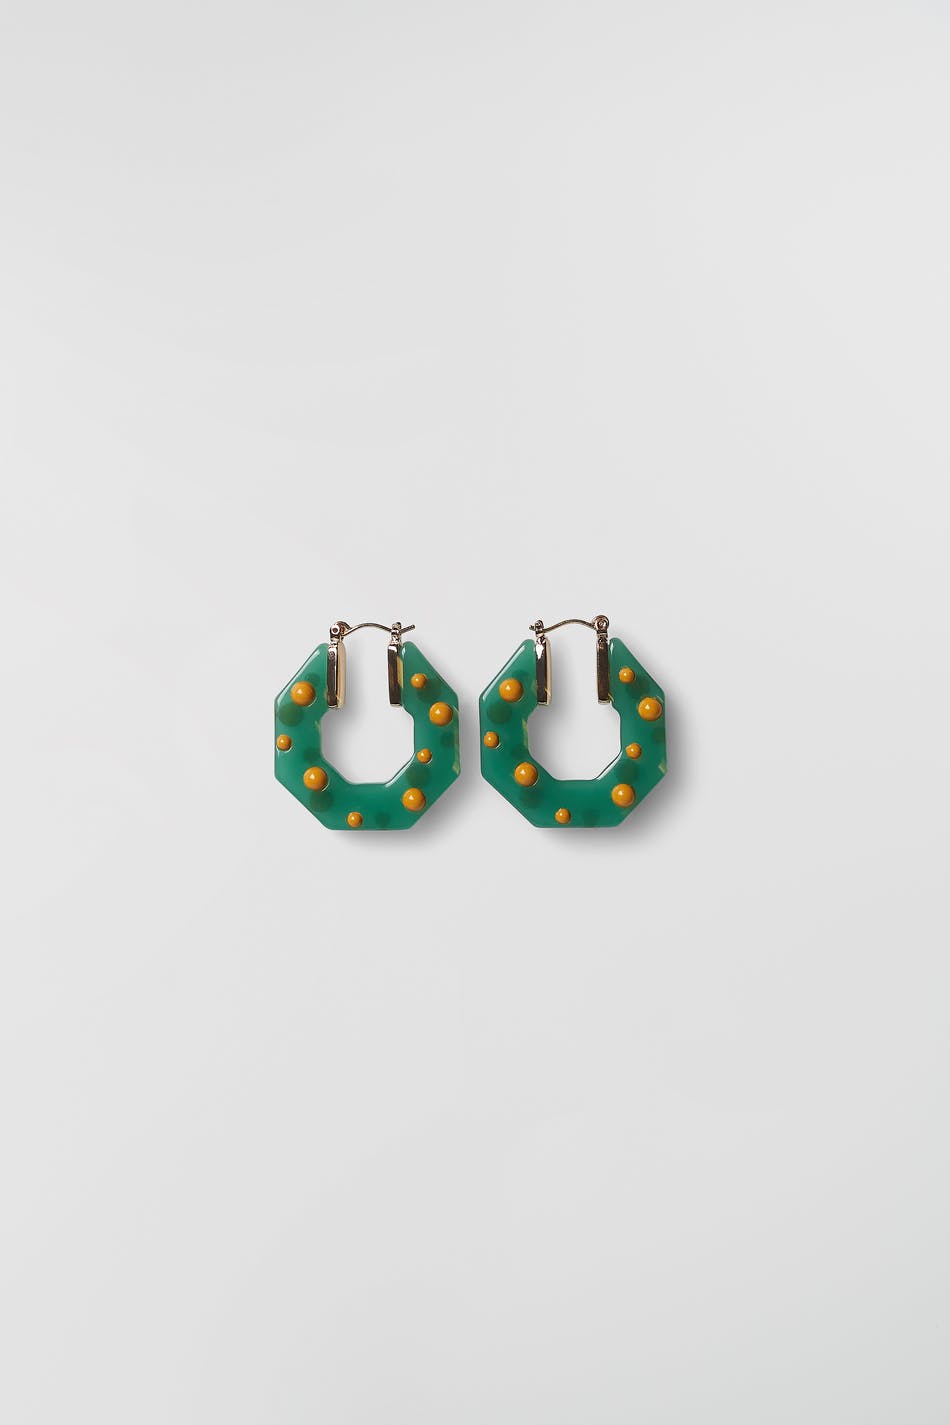 Gina Tricot Yaya earrings ONESZ  Green/gold (6311)